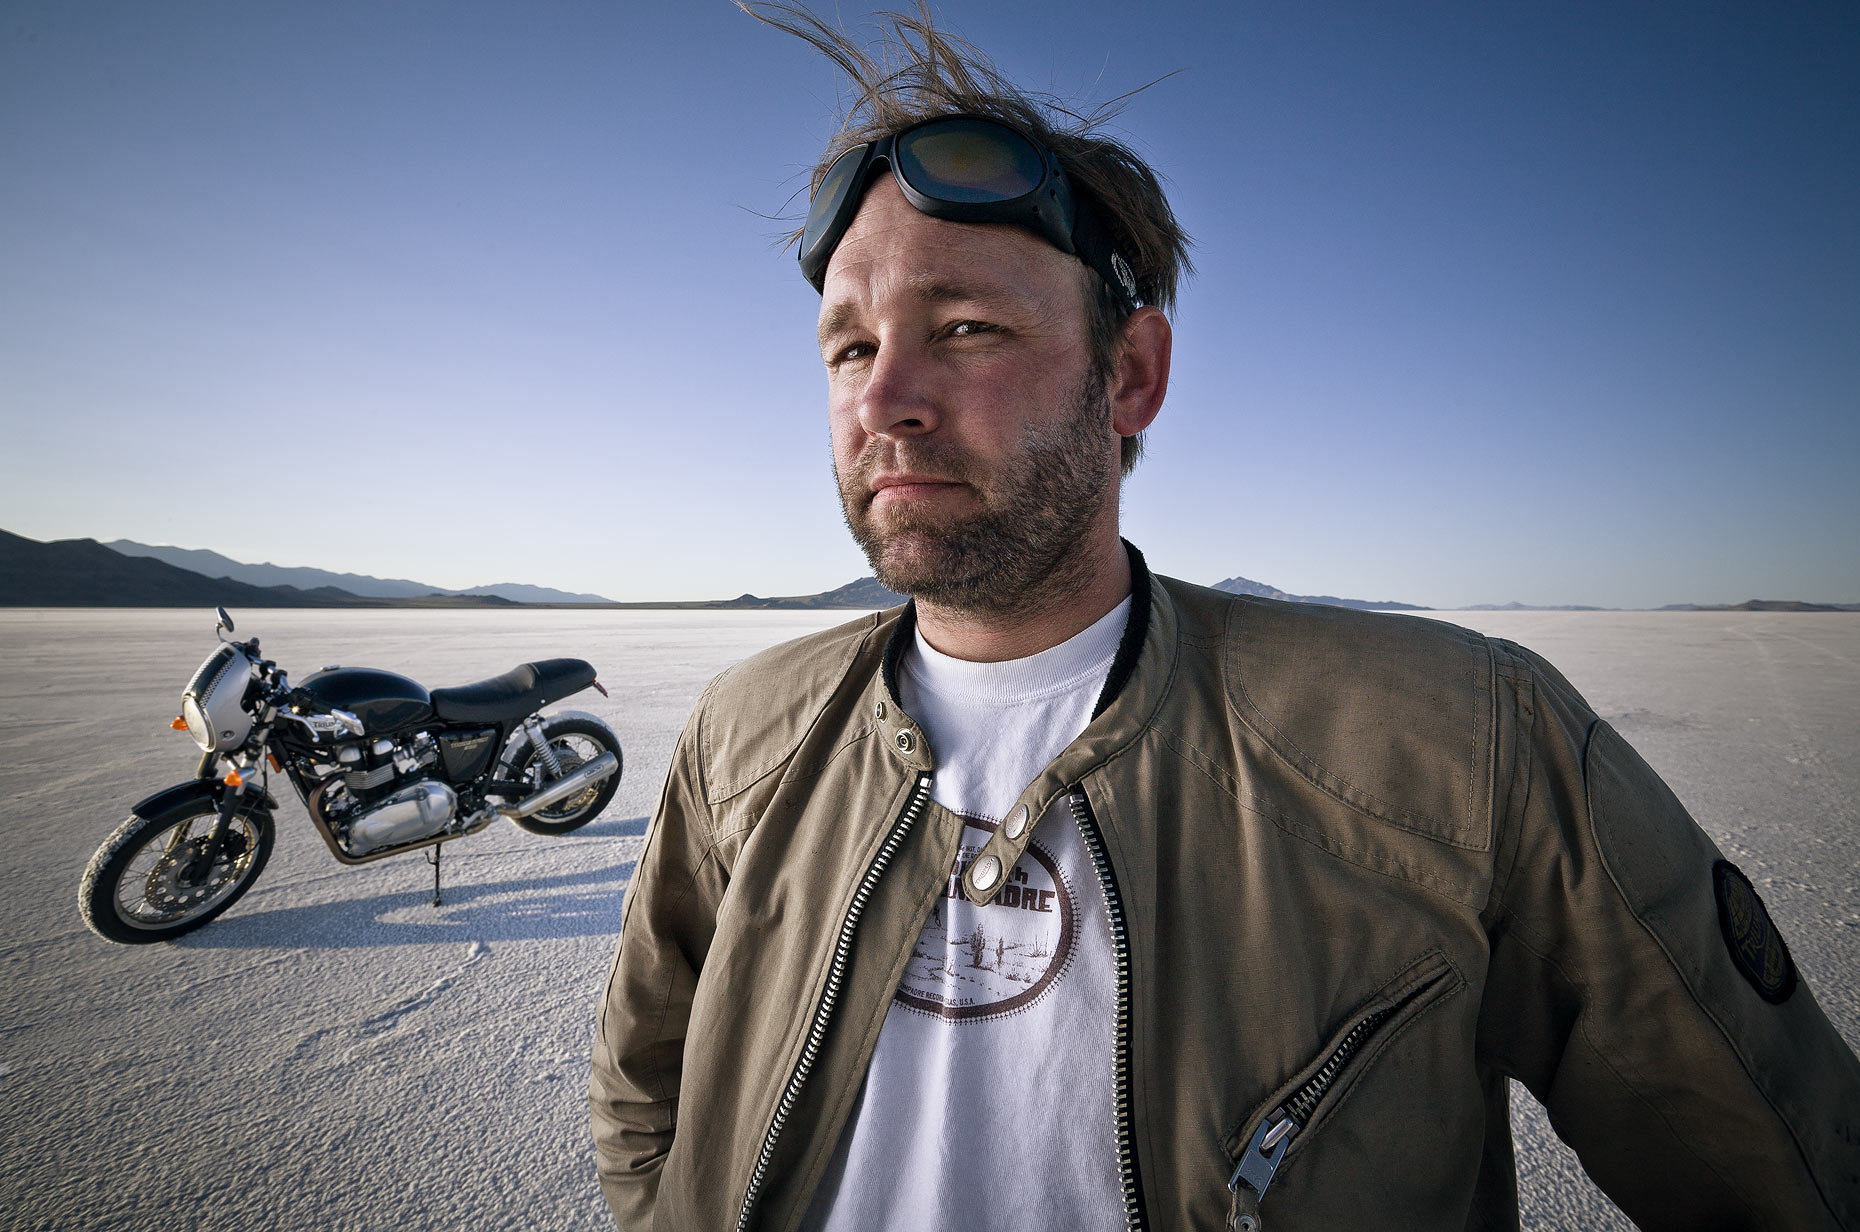 Sean-Gilligan-Portraits-Moto-salt-flat-racer.jpg